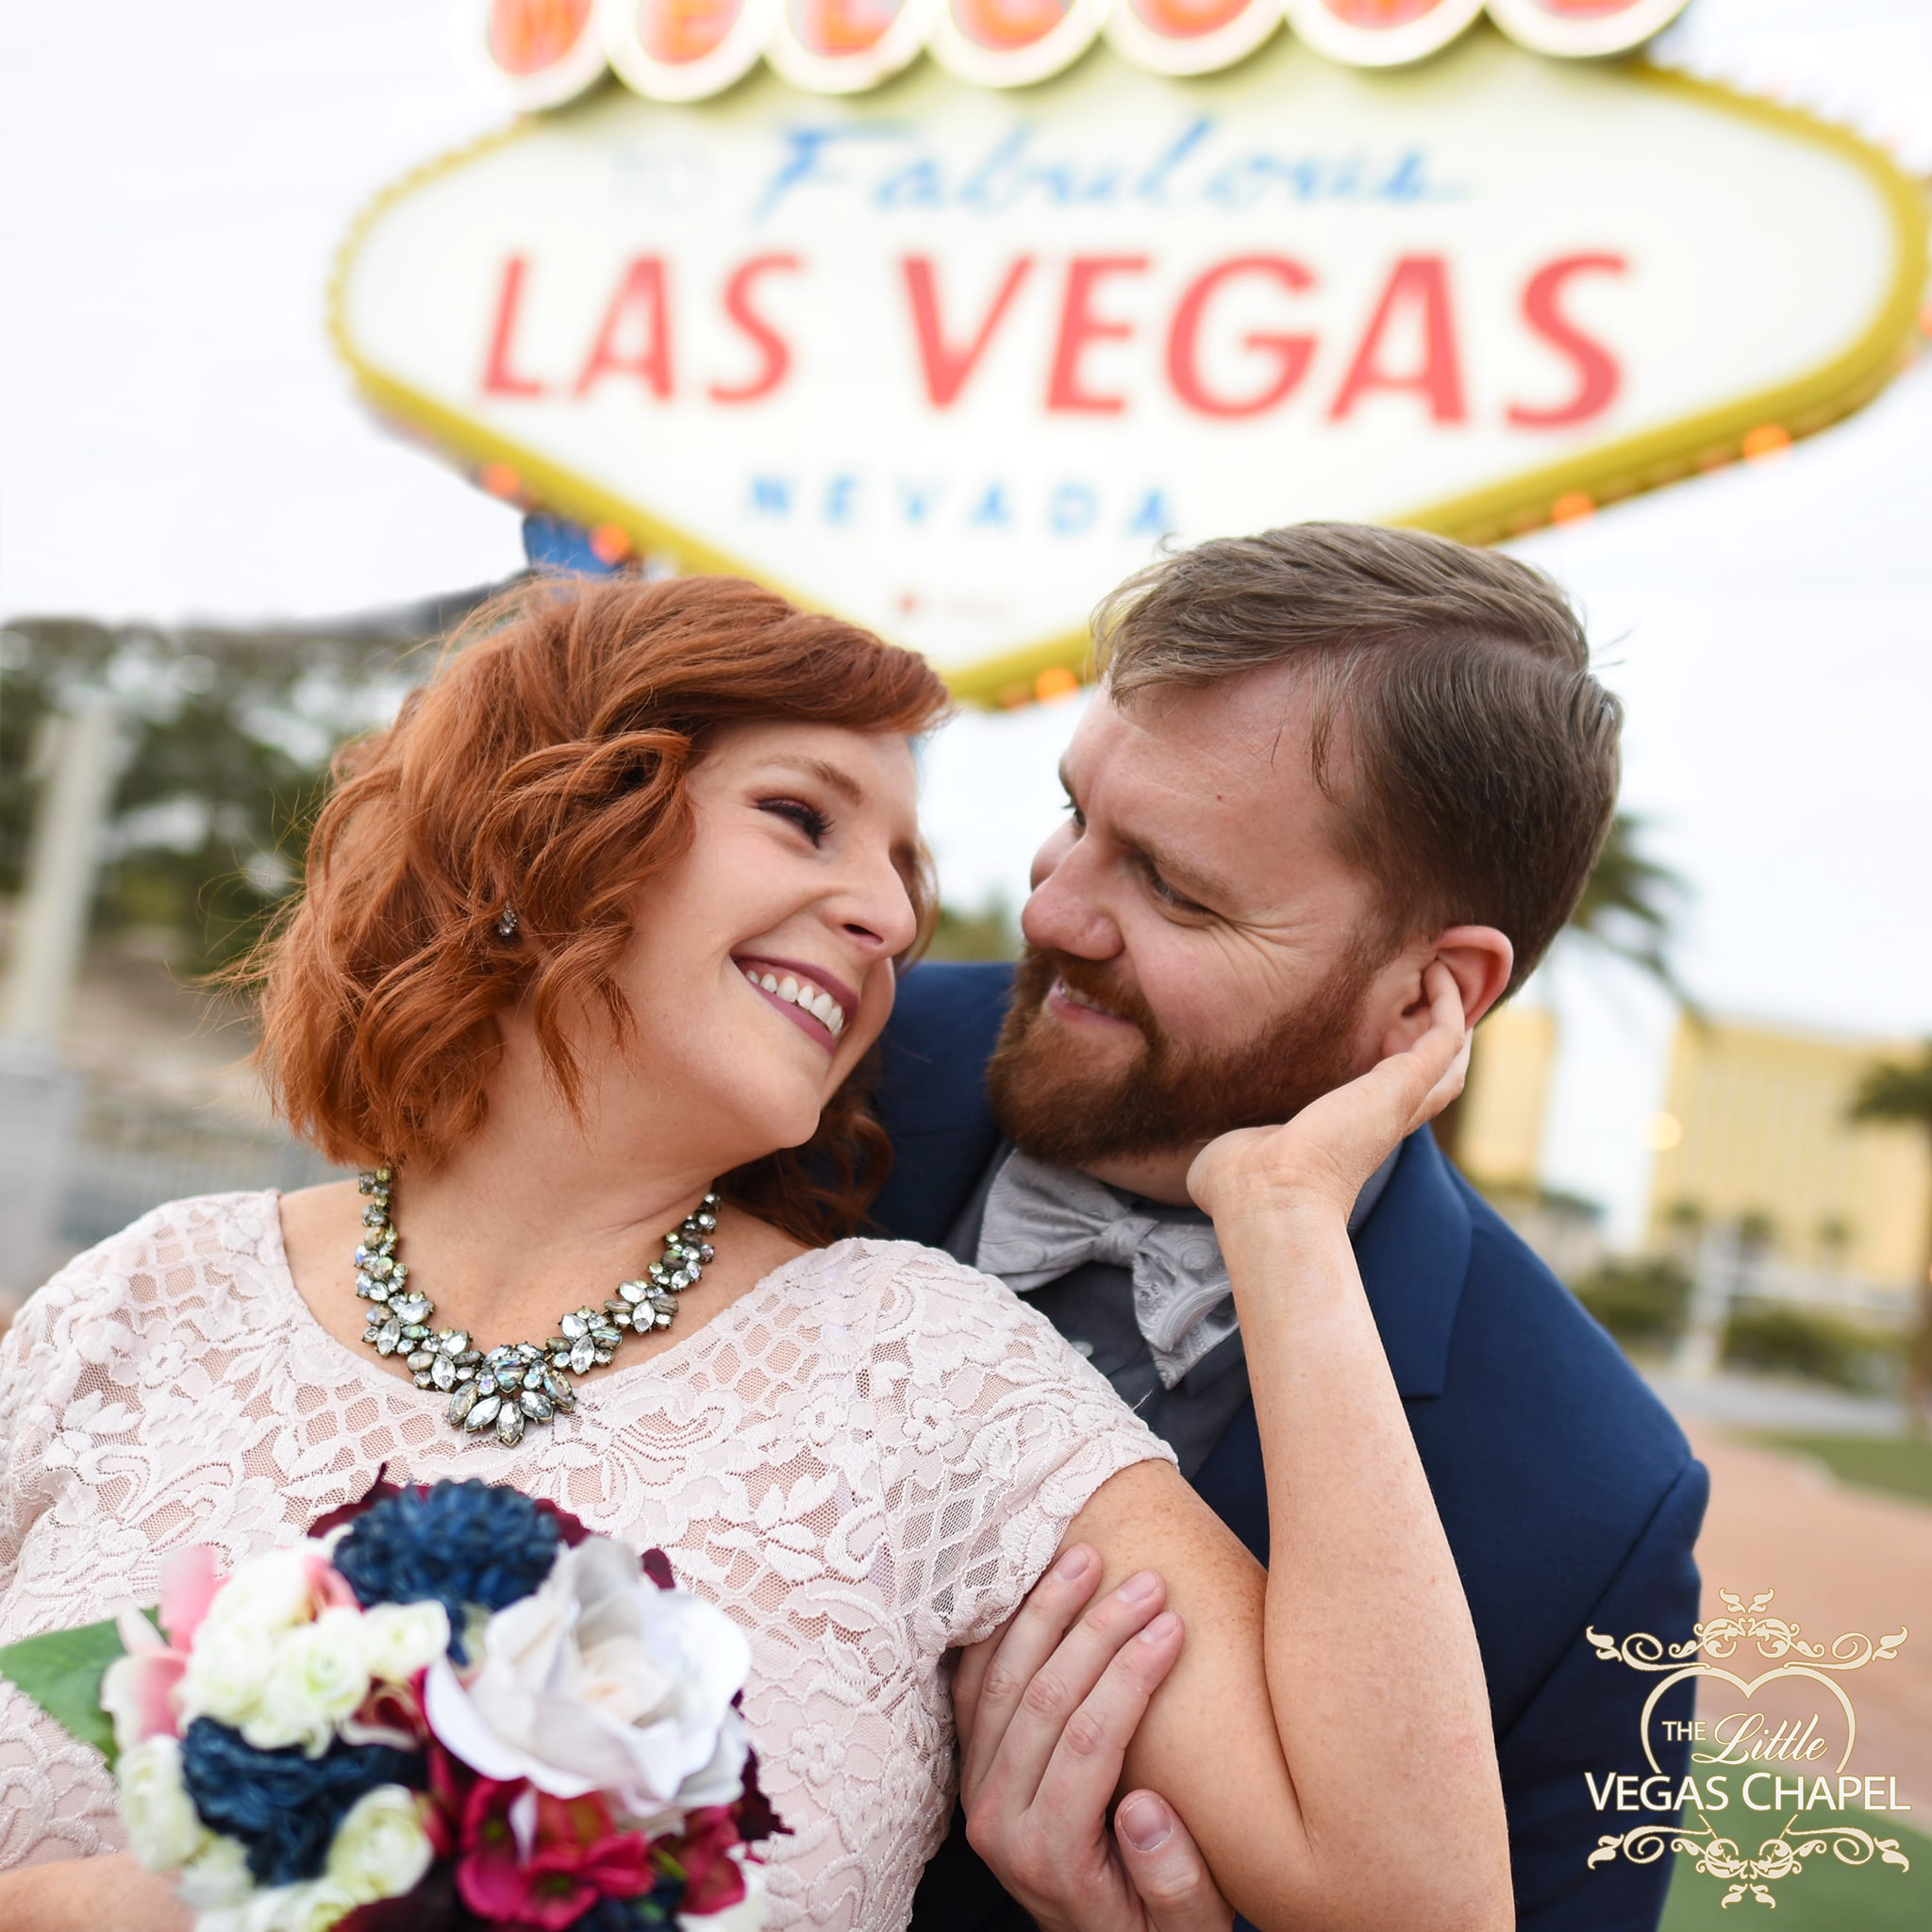 Wedding Photos in Front of Las Vegas Sign